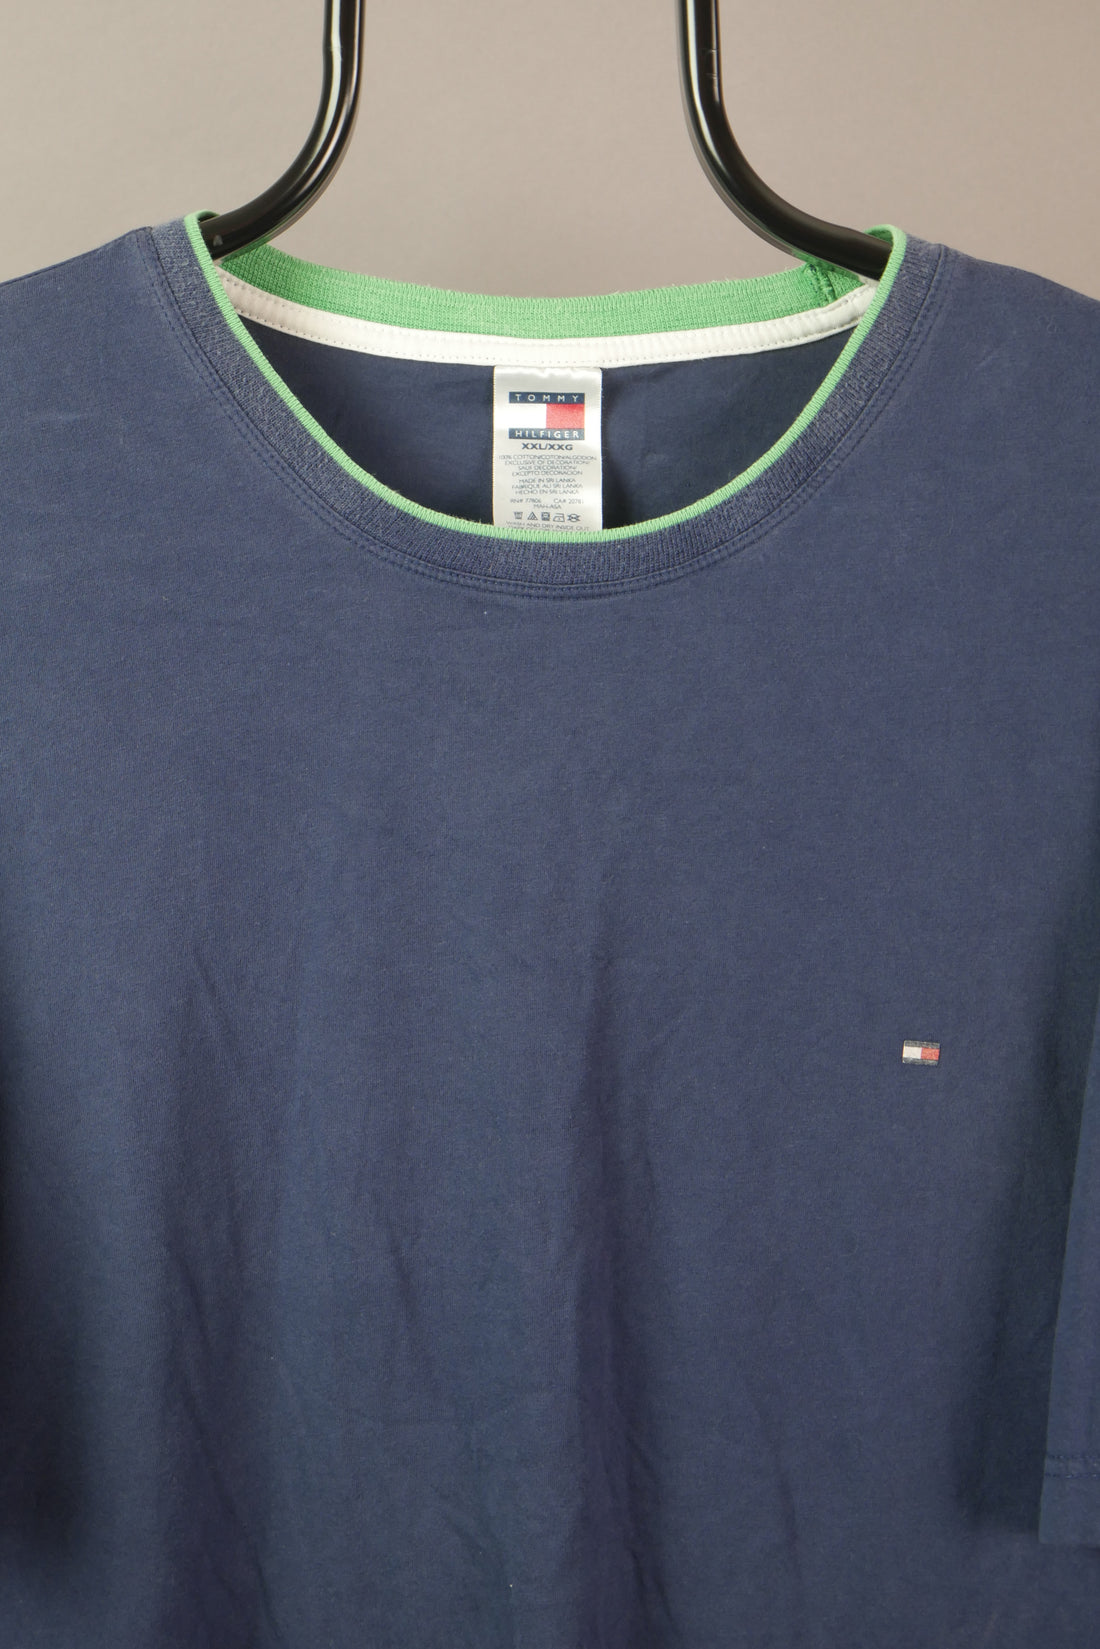 The Tommy Hilfiger T-Shirt (2XL)